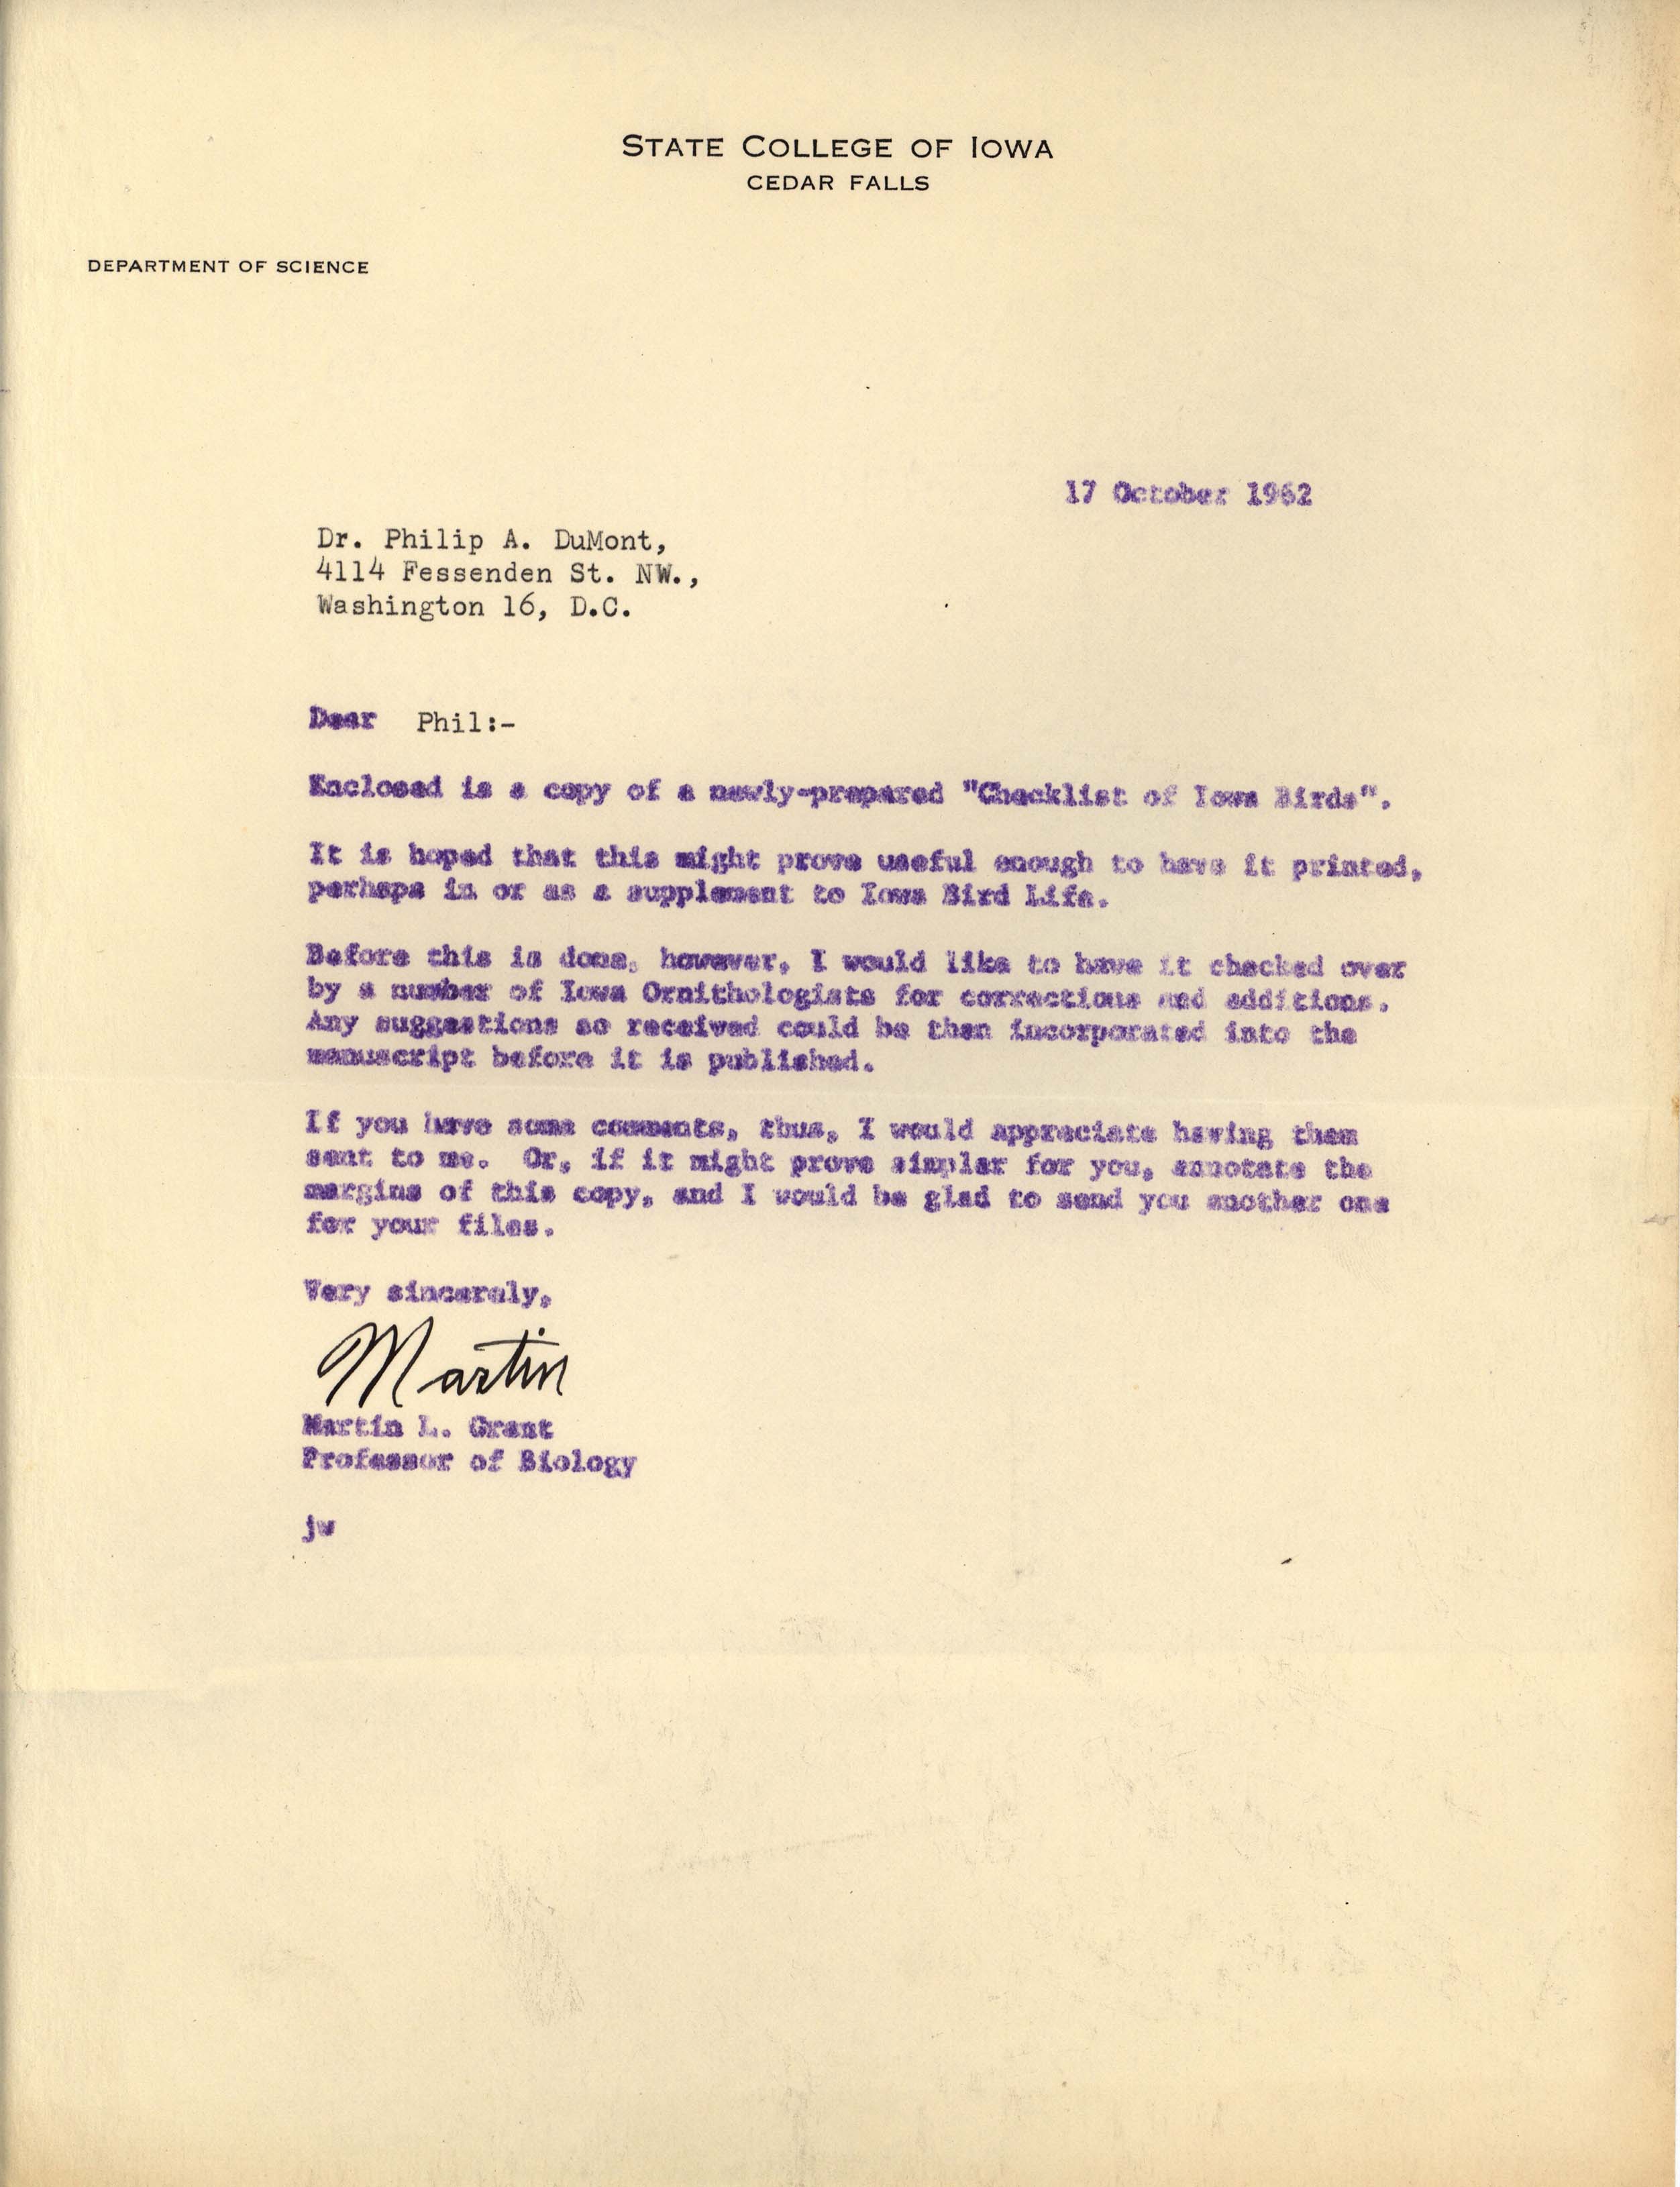 Martin Grant letter to Philip DuMont regarding the Check-list of Iowa Birds, October 17, 1962